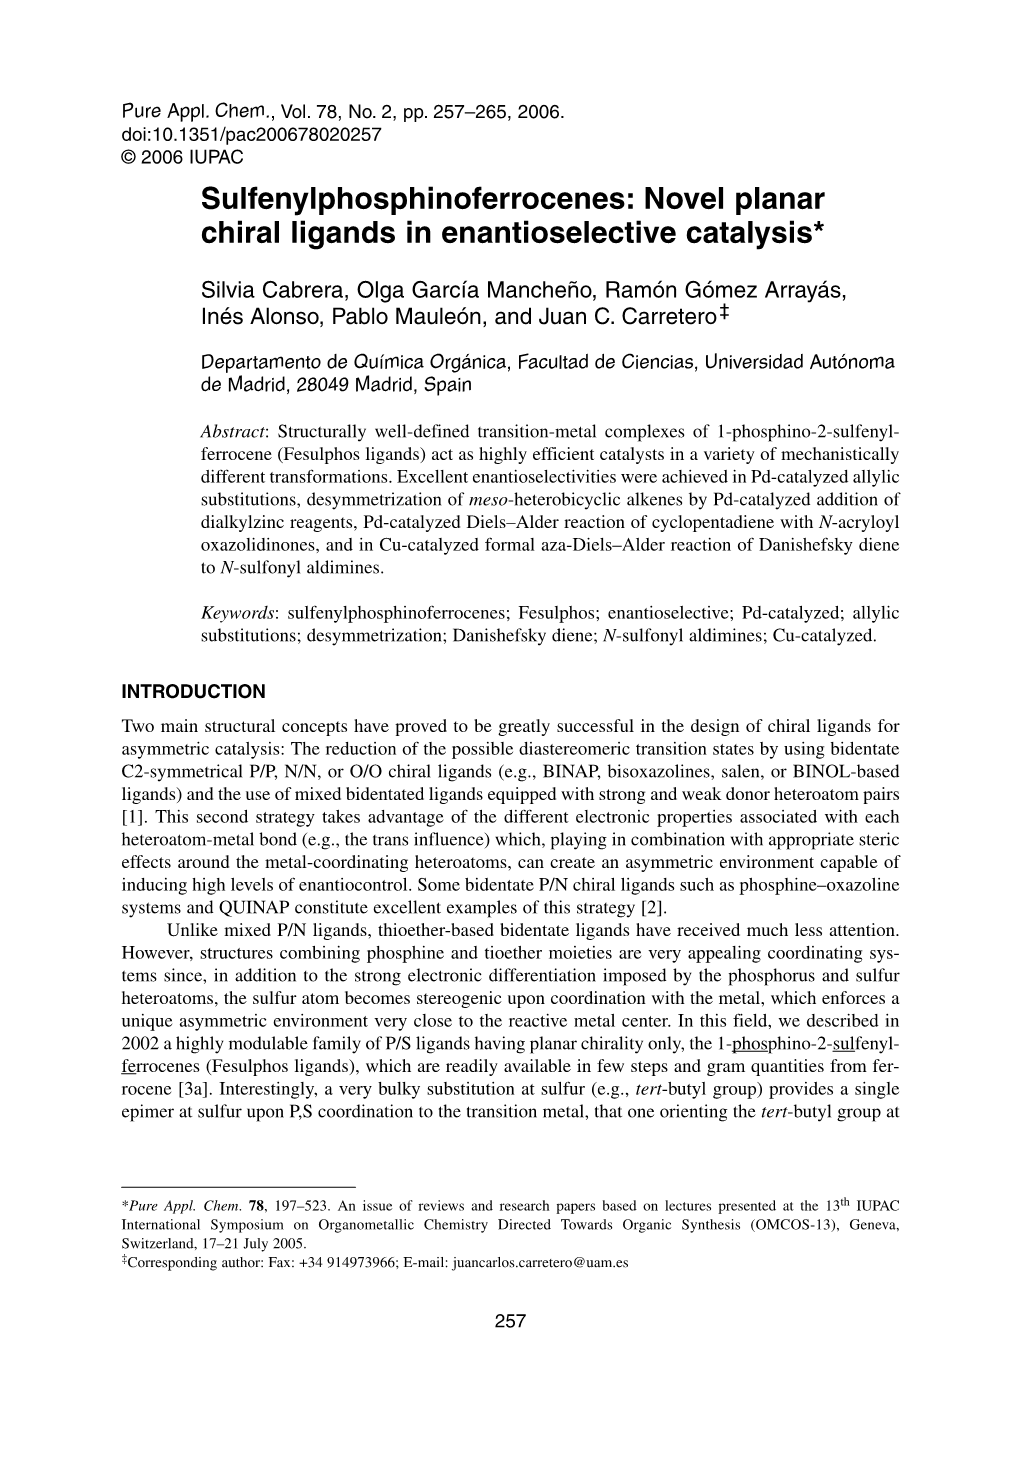 Sulfenylphosphinoferrocenes: Novel Planar Chiral Ligands in Enantioselective Catalysis*